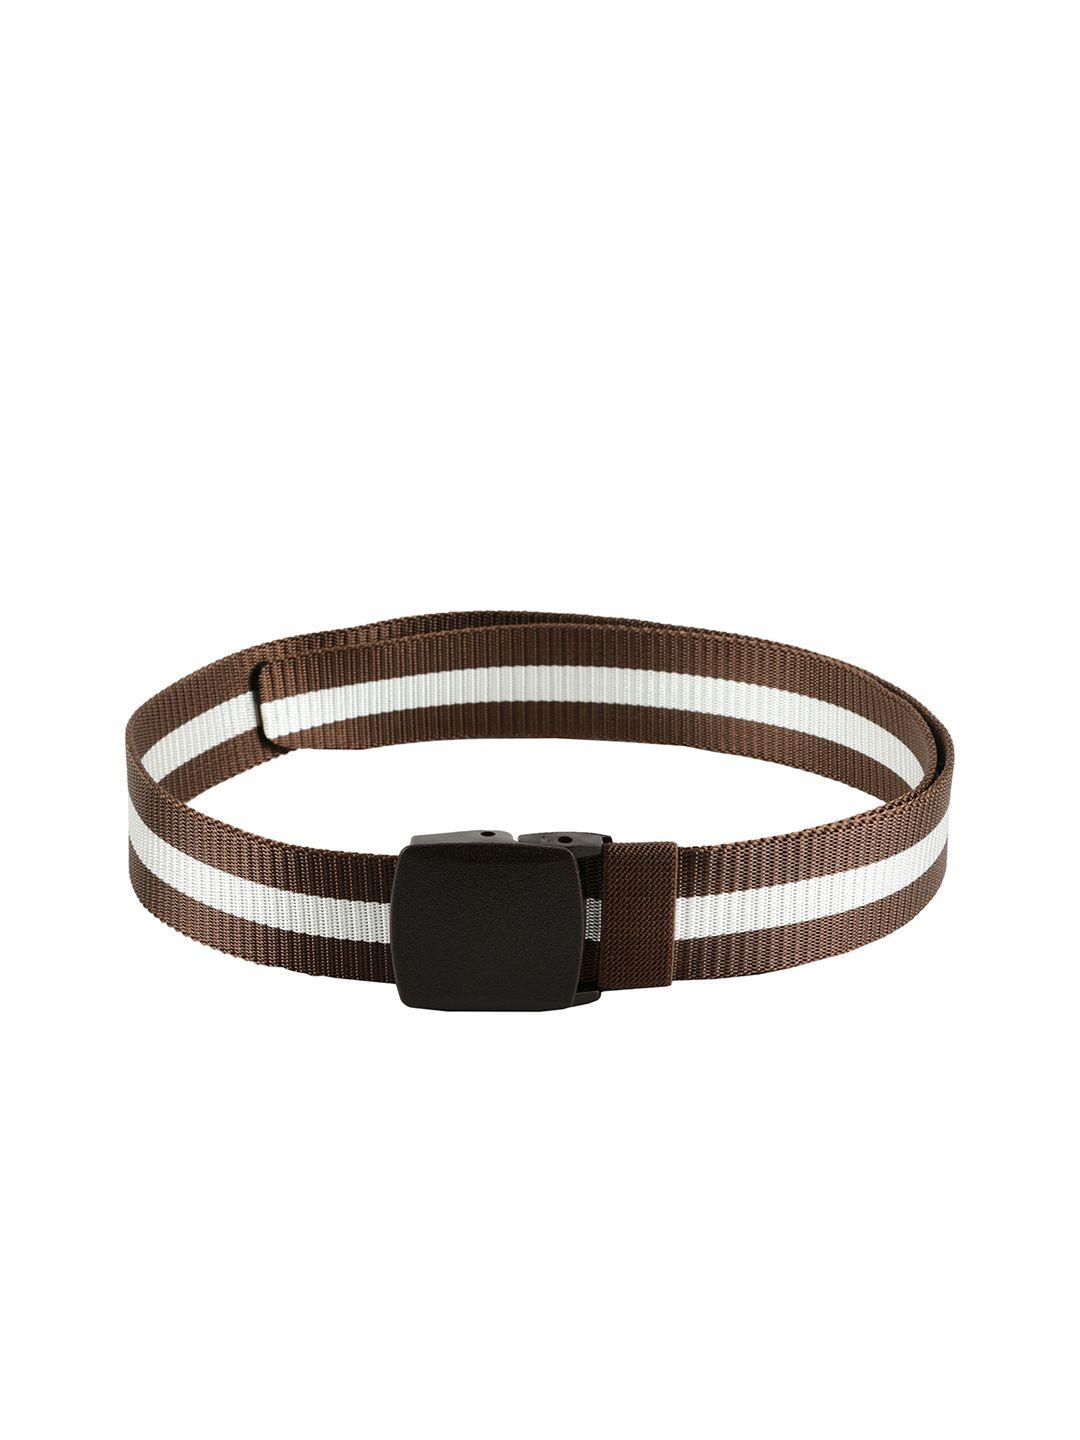 winsome deal men brown & white striped belt